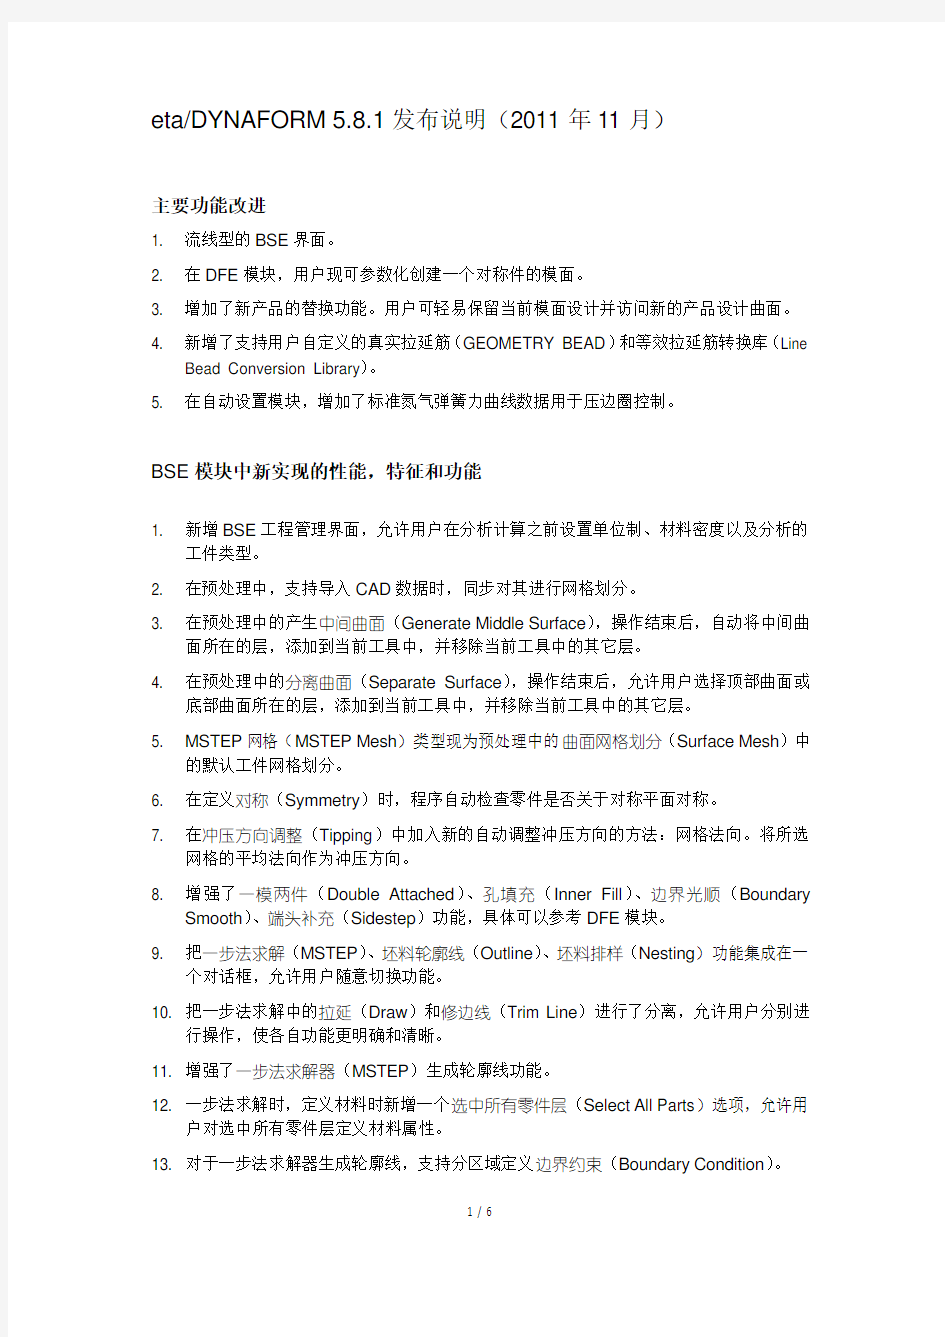 DYNAFORM_5.8.1_发布说明 中文版